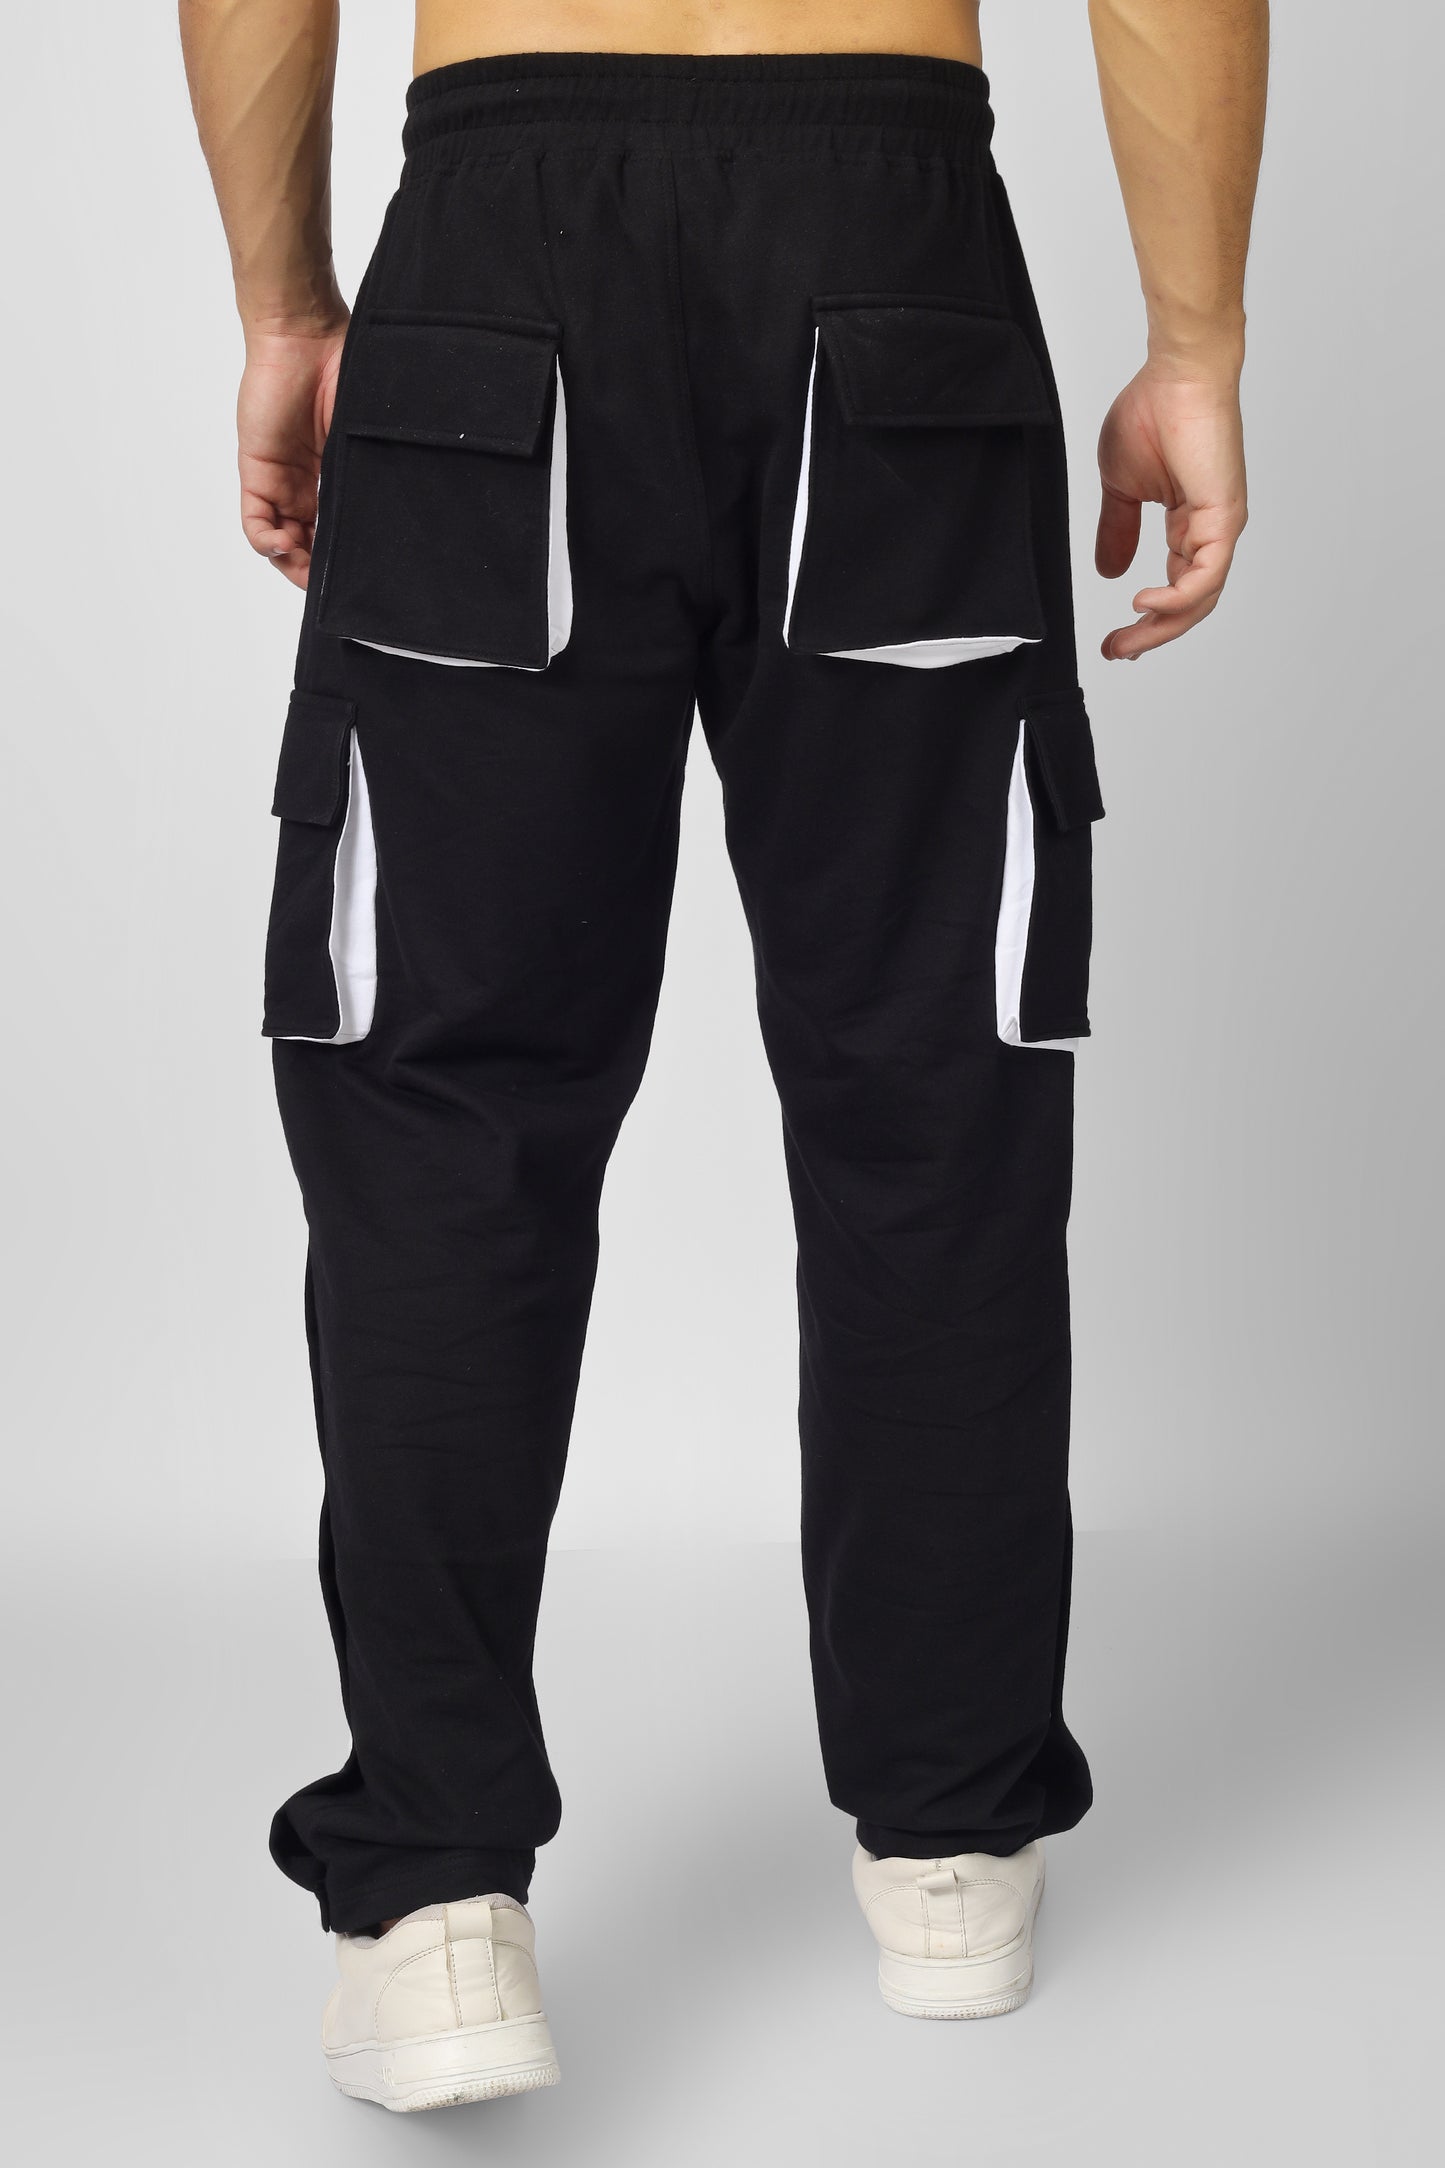 6 Pocket Cargo Pant Black & White Highlighter - Wearduds